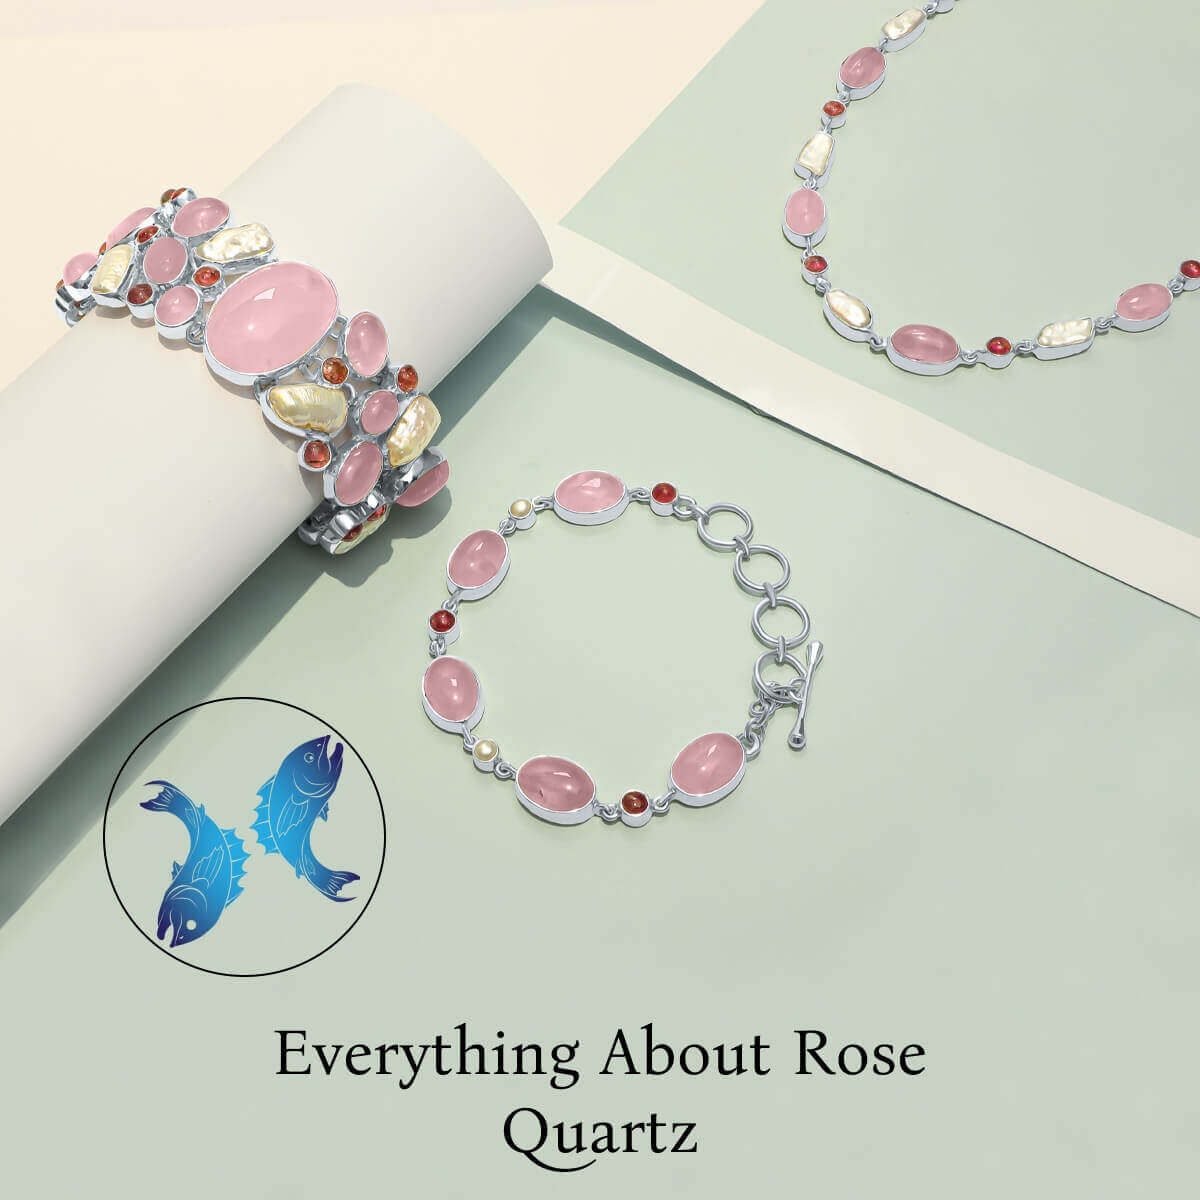 Rose Quartz: A Comprehensive Guide To The Love Stone